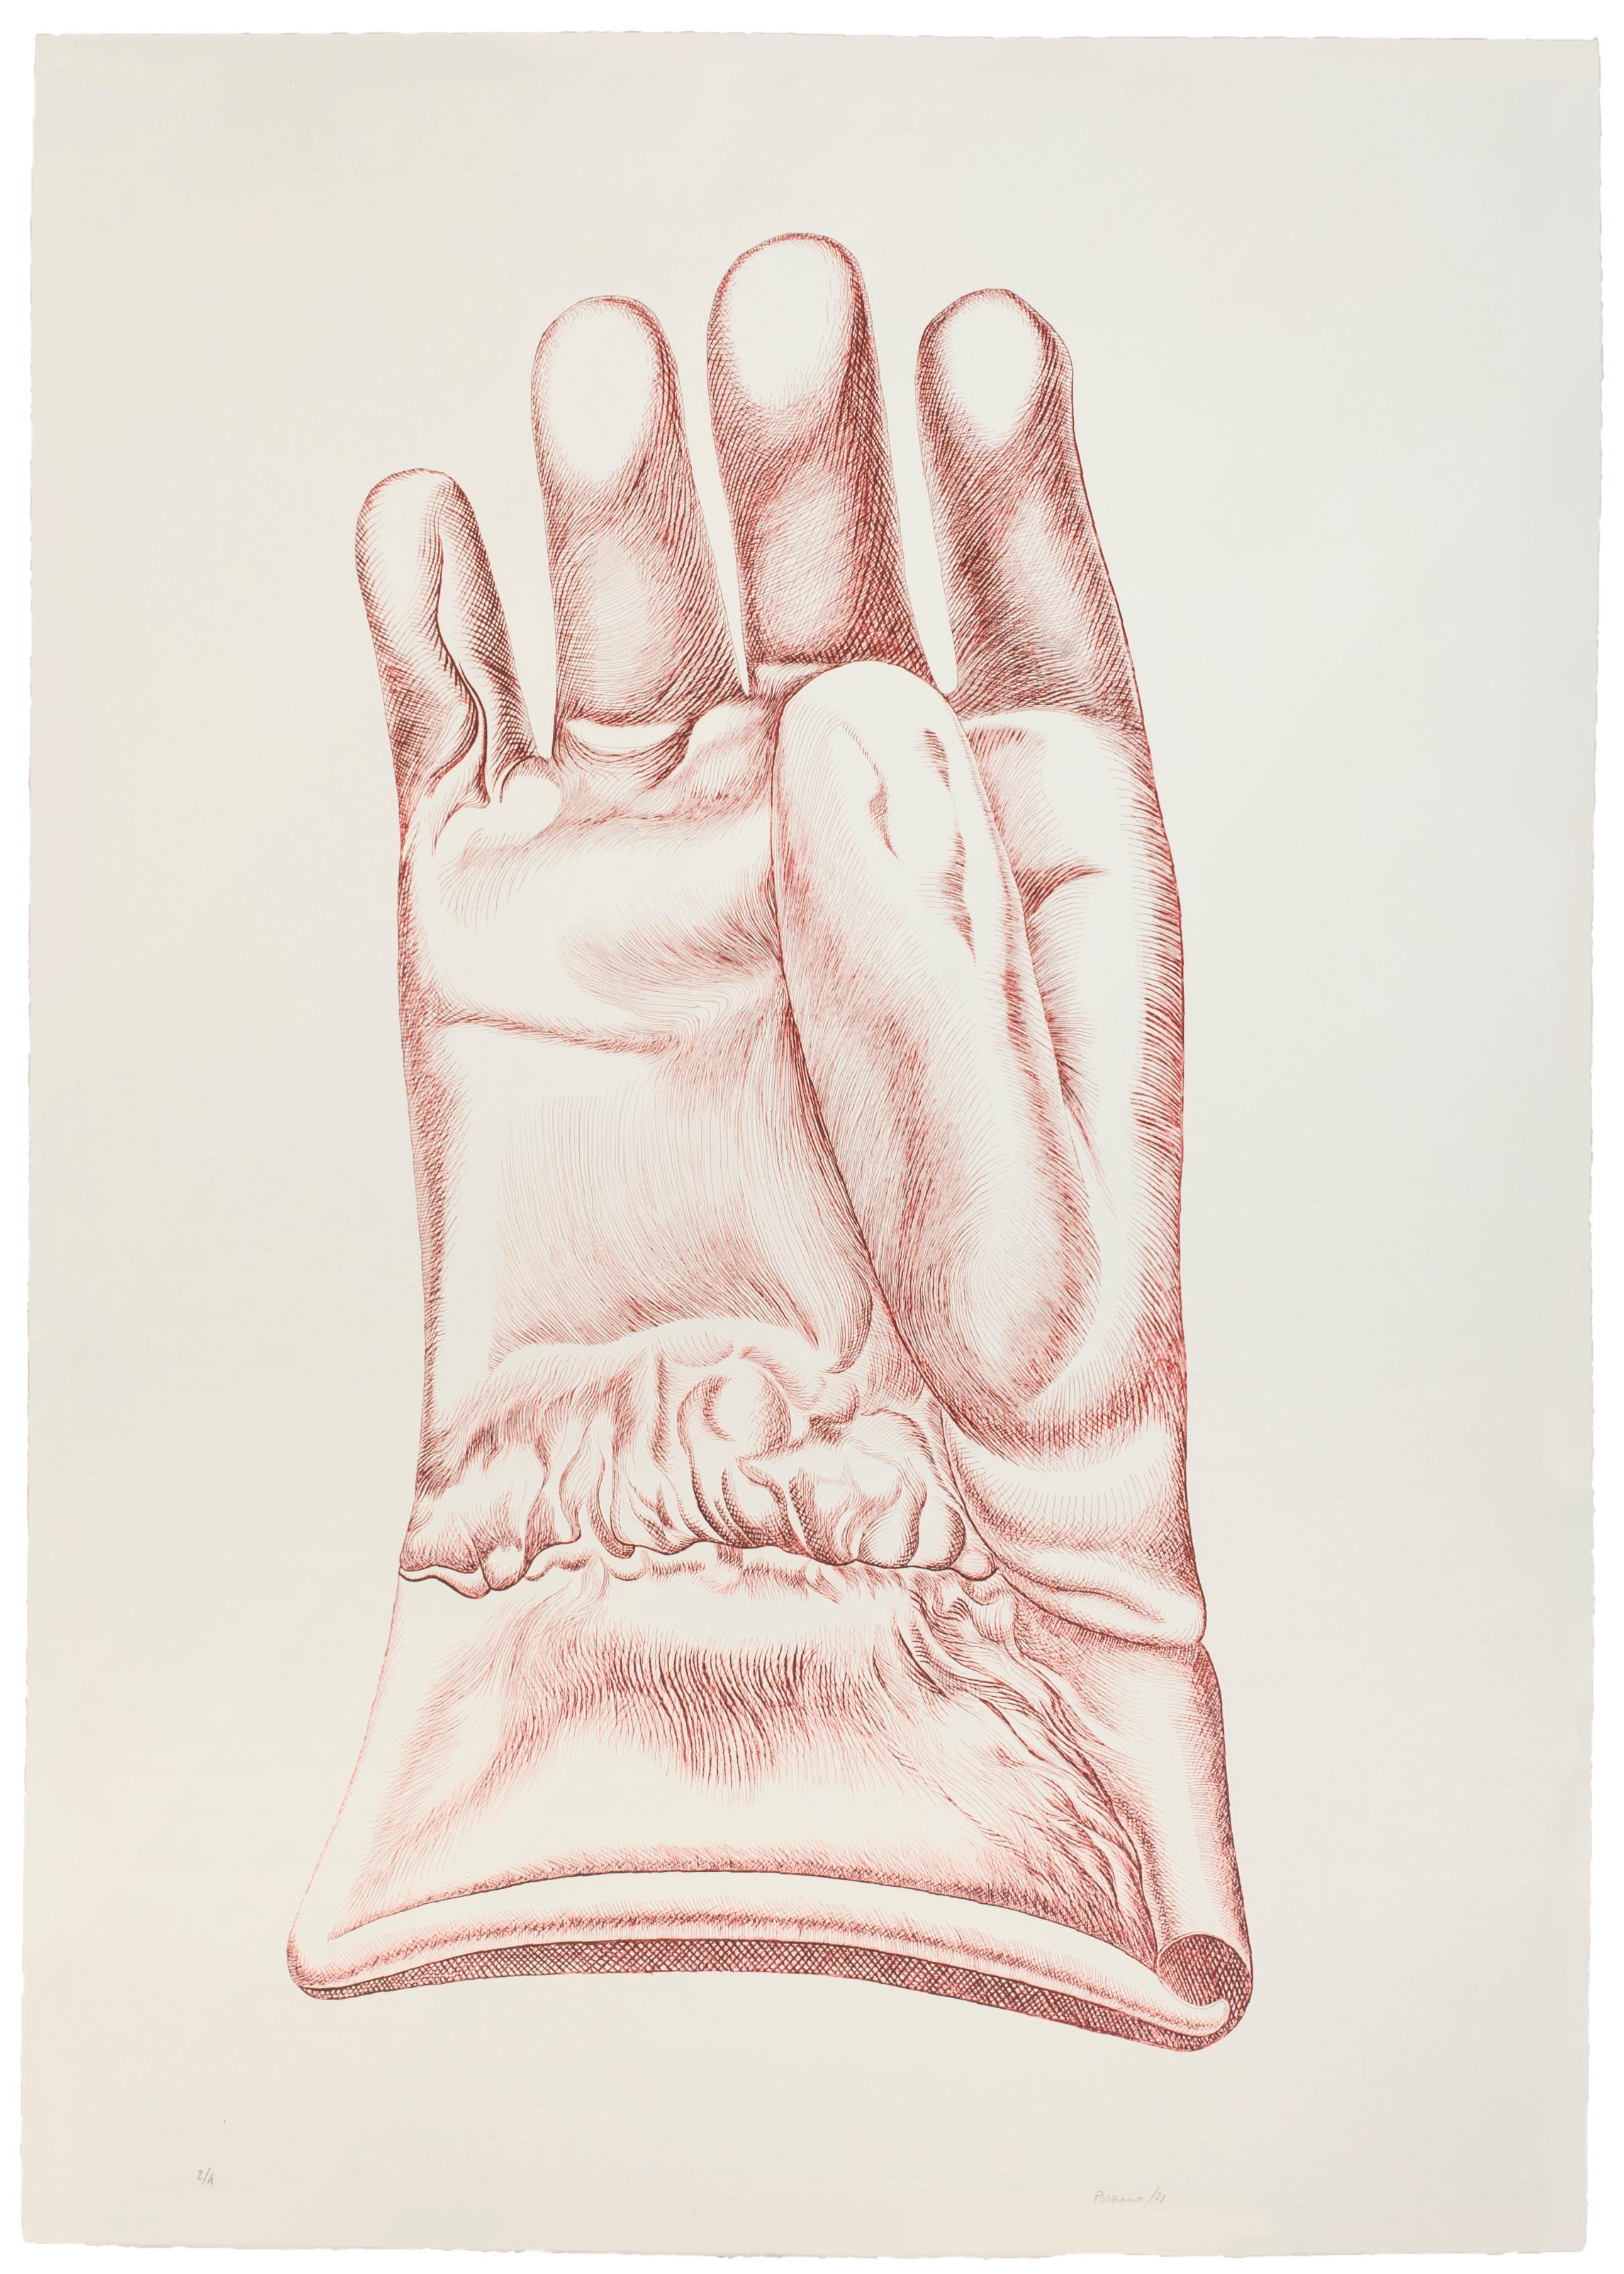 Red Glove - Etching by Giacomo Porzano - 1972